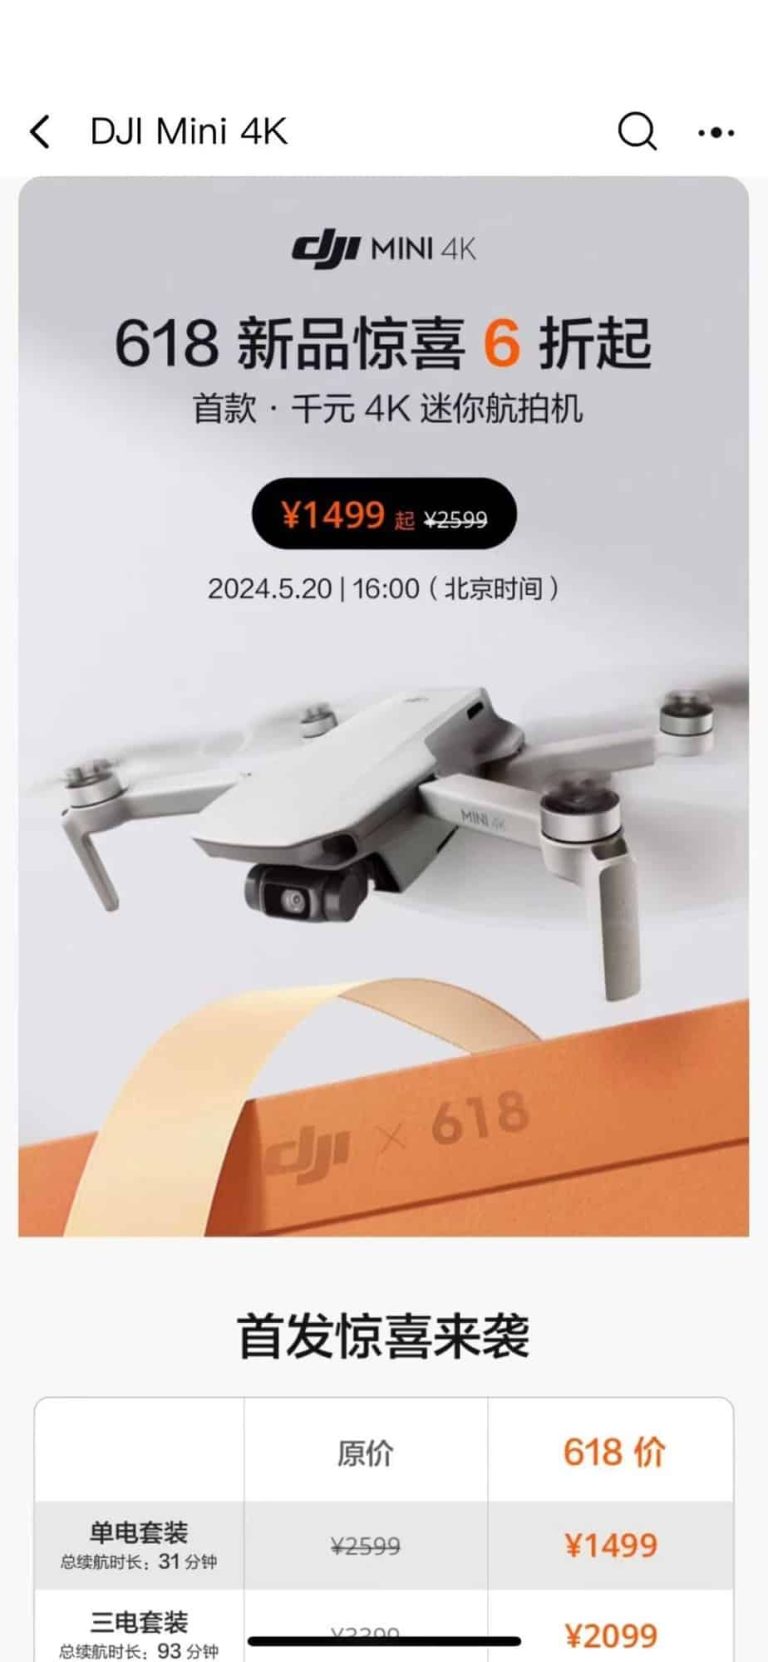 DJI Mini 4K Drone: Exclusive Sale in China Announced